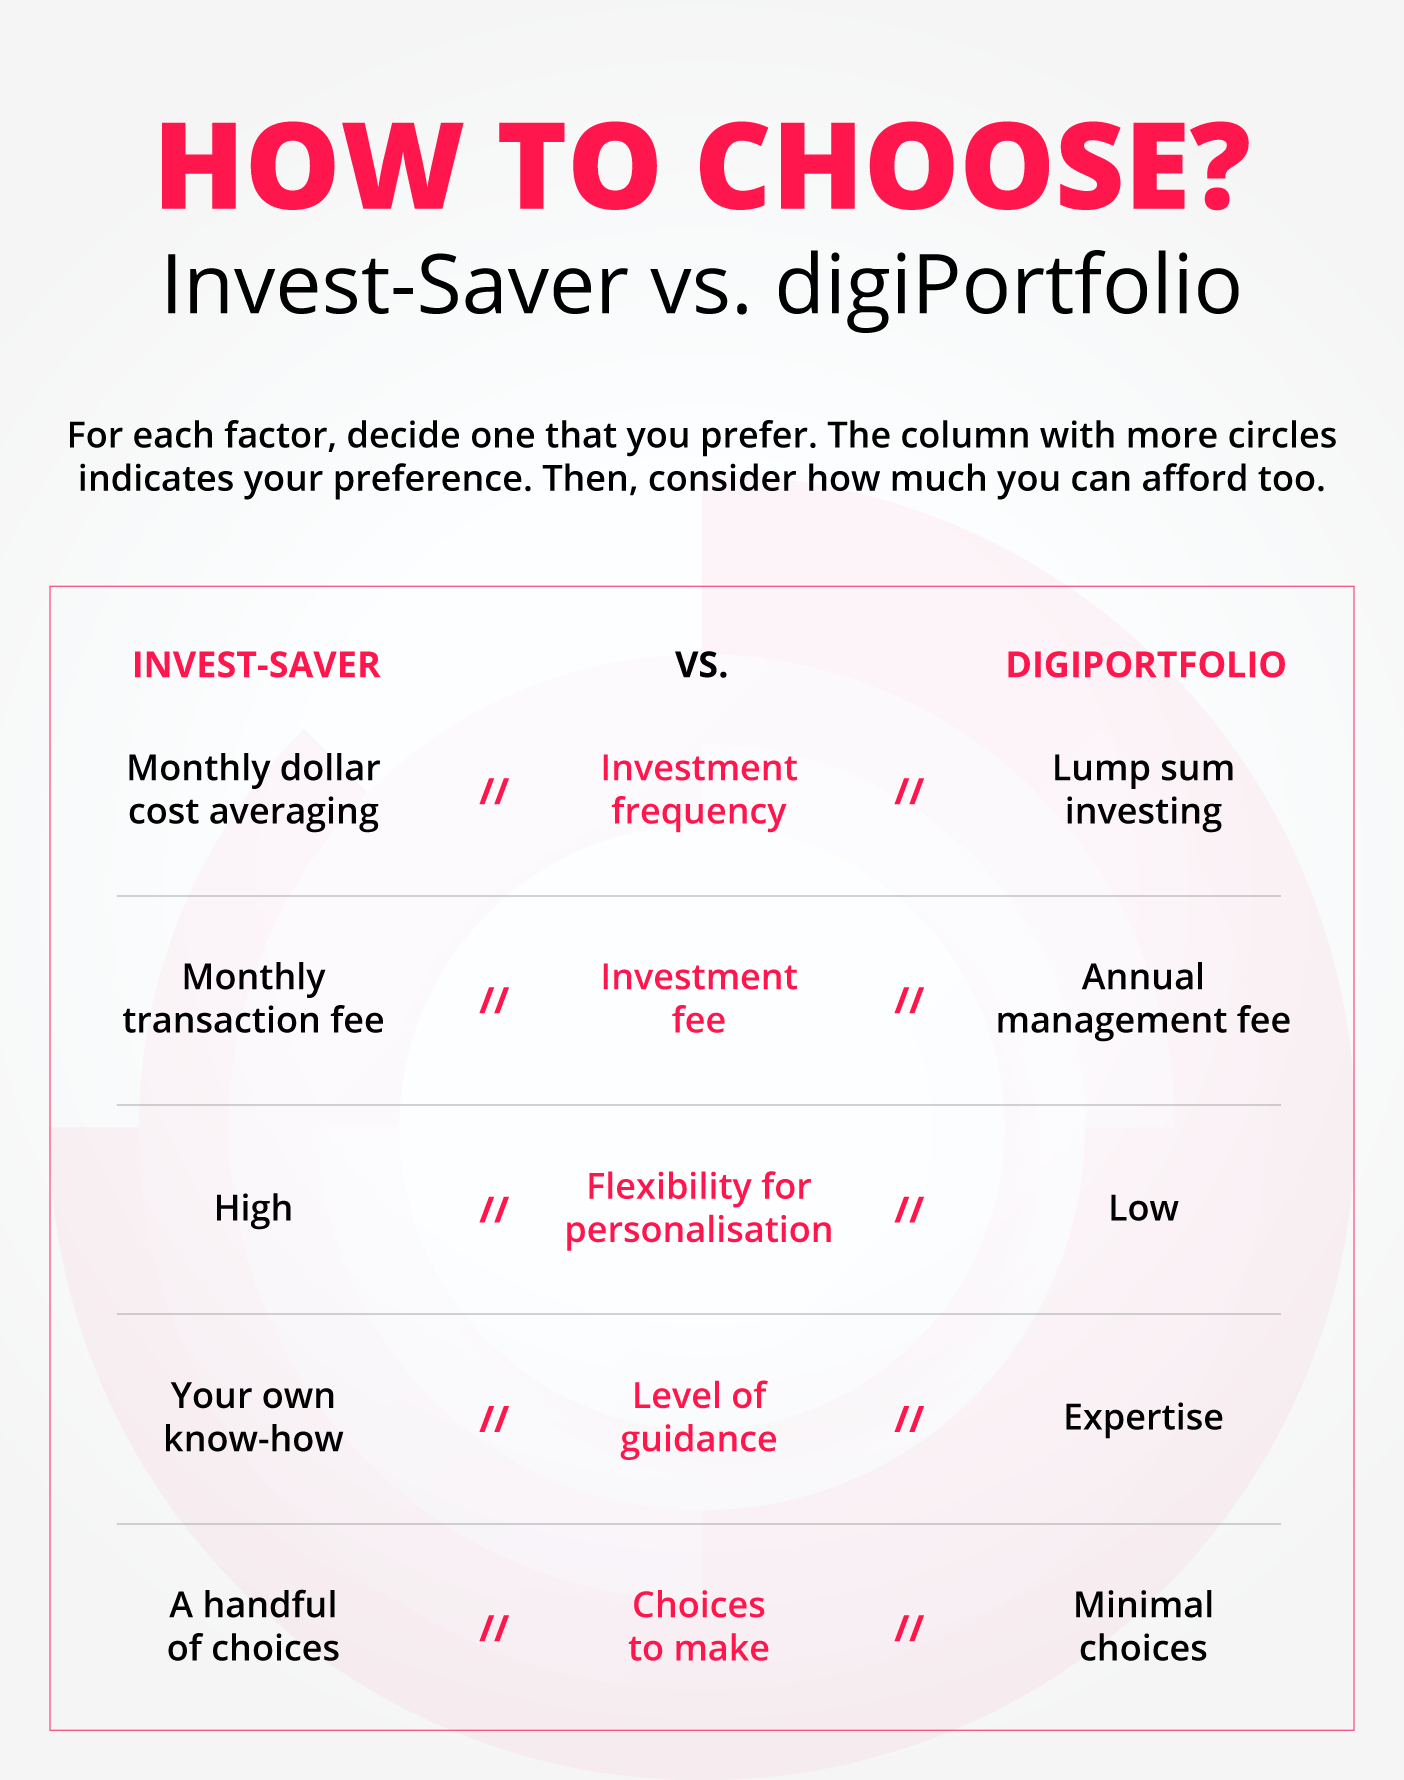 Decision matrix to choose between Invest-Saver and digiPortfolio.